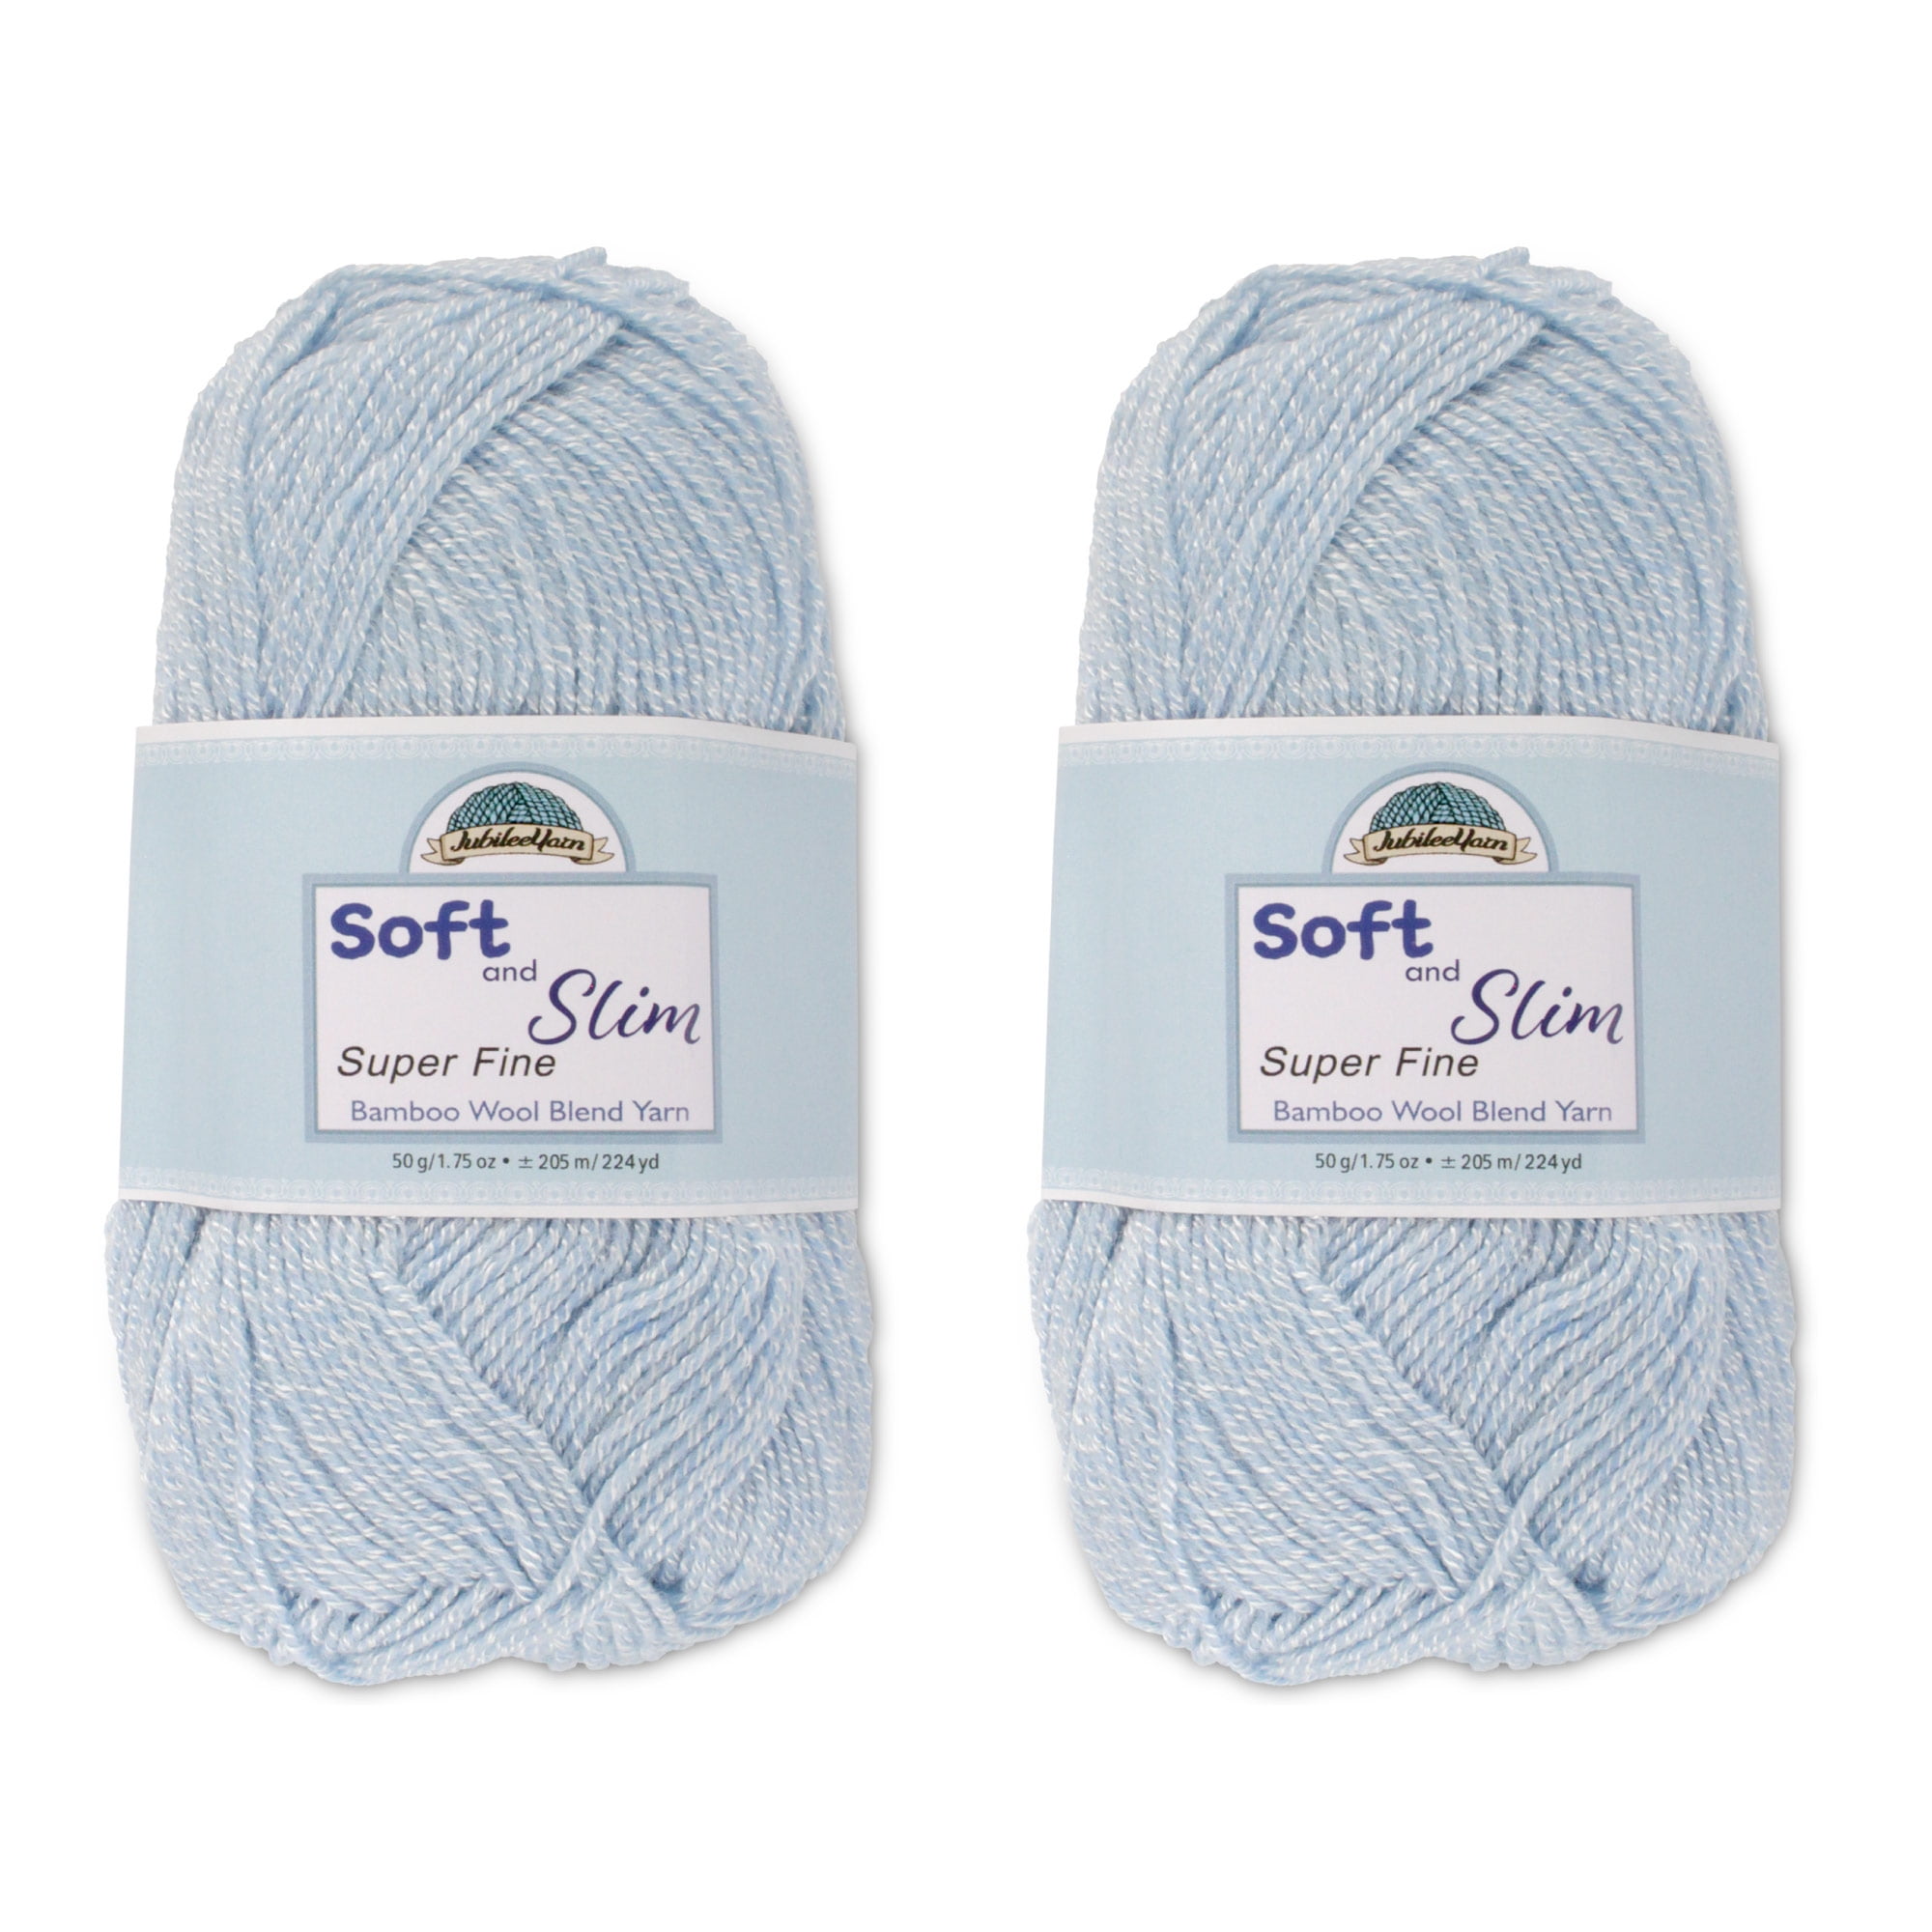  JubileeYarn Soft and Slim Yarn - Baby Weight Bamboo Wool Blend  - 50g/Skein - 9913 Apricot - 2 Skeins